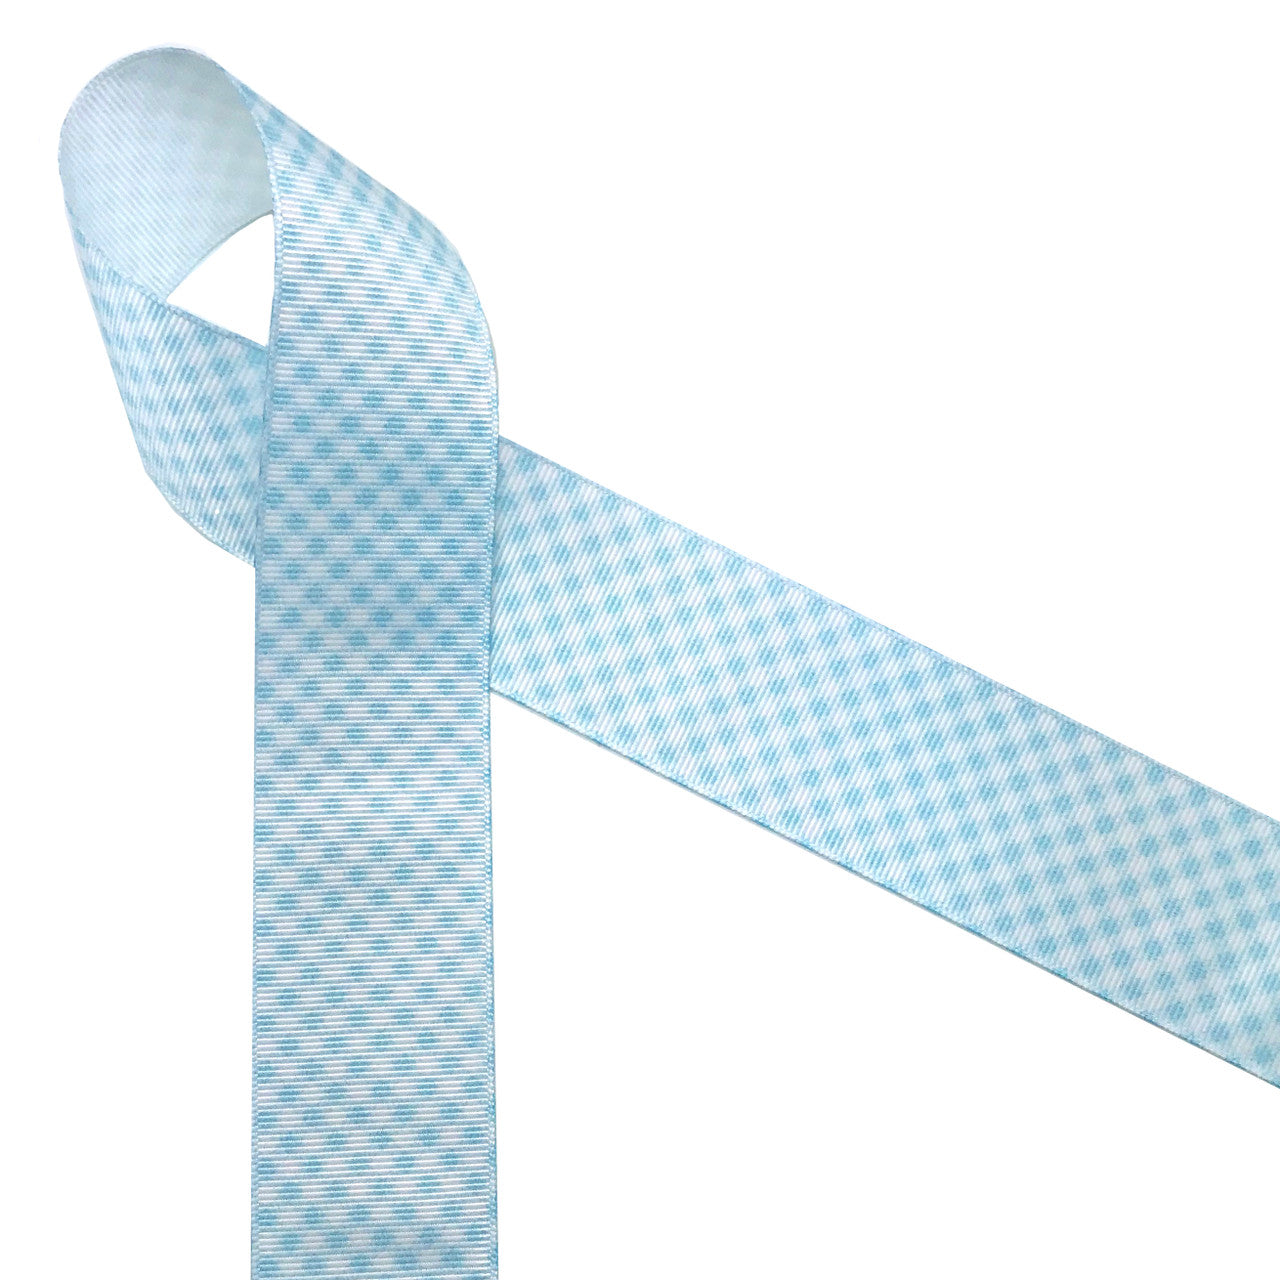 Gingham Check Ribbon in light baby blue and white on 1.5 White grosgrain